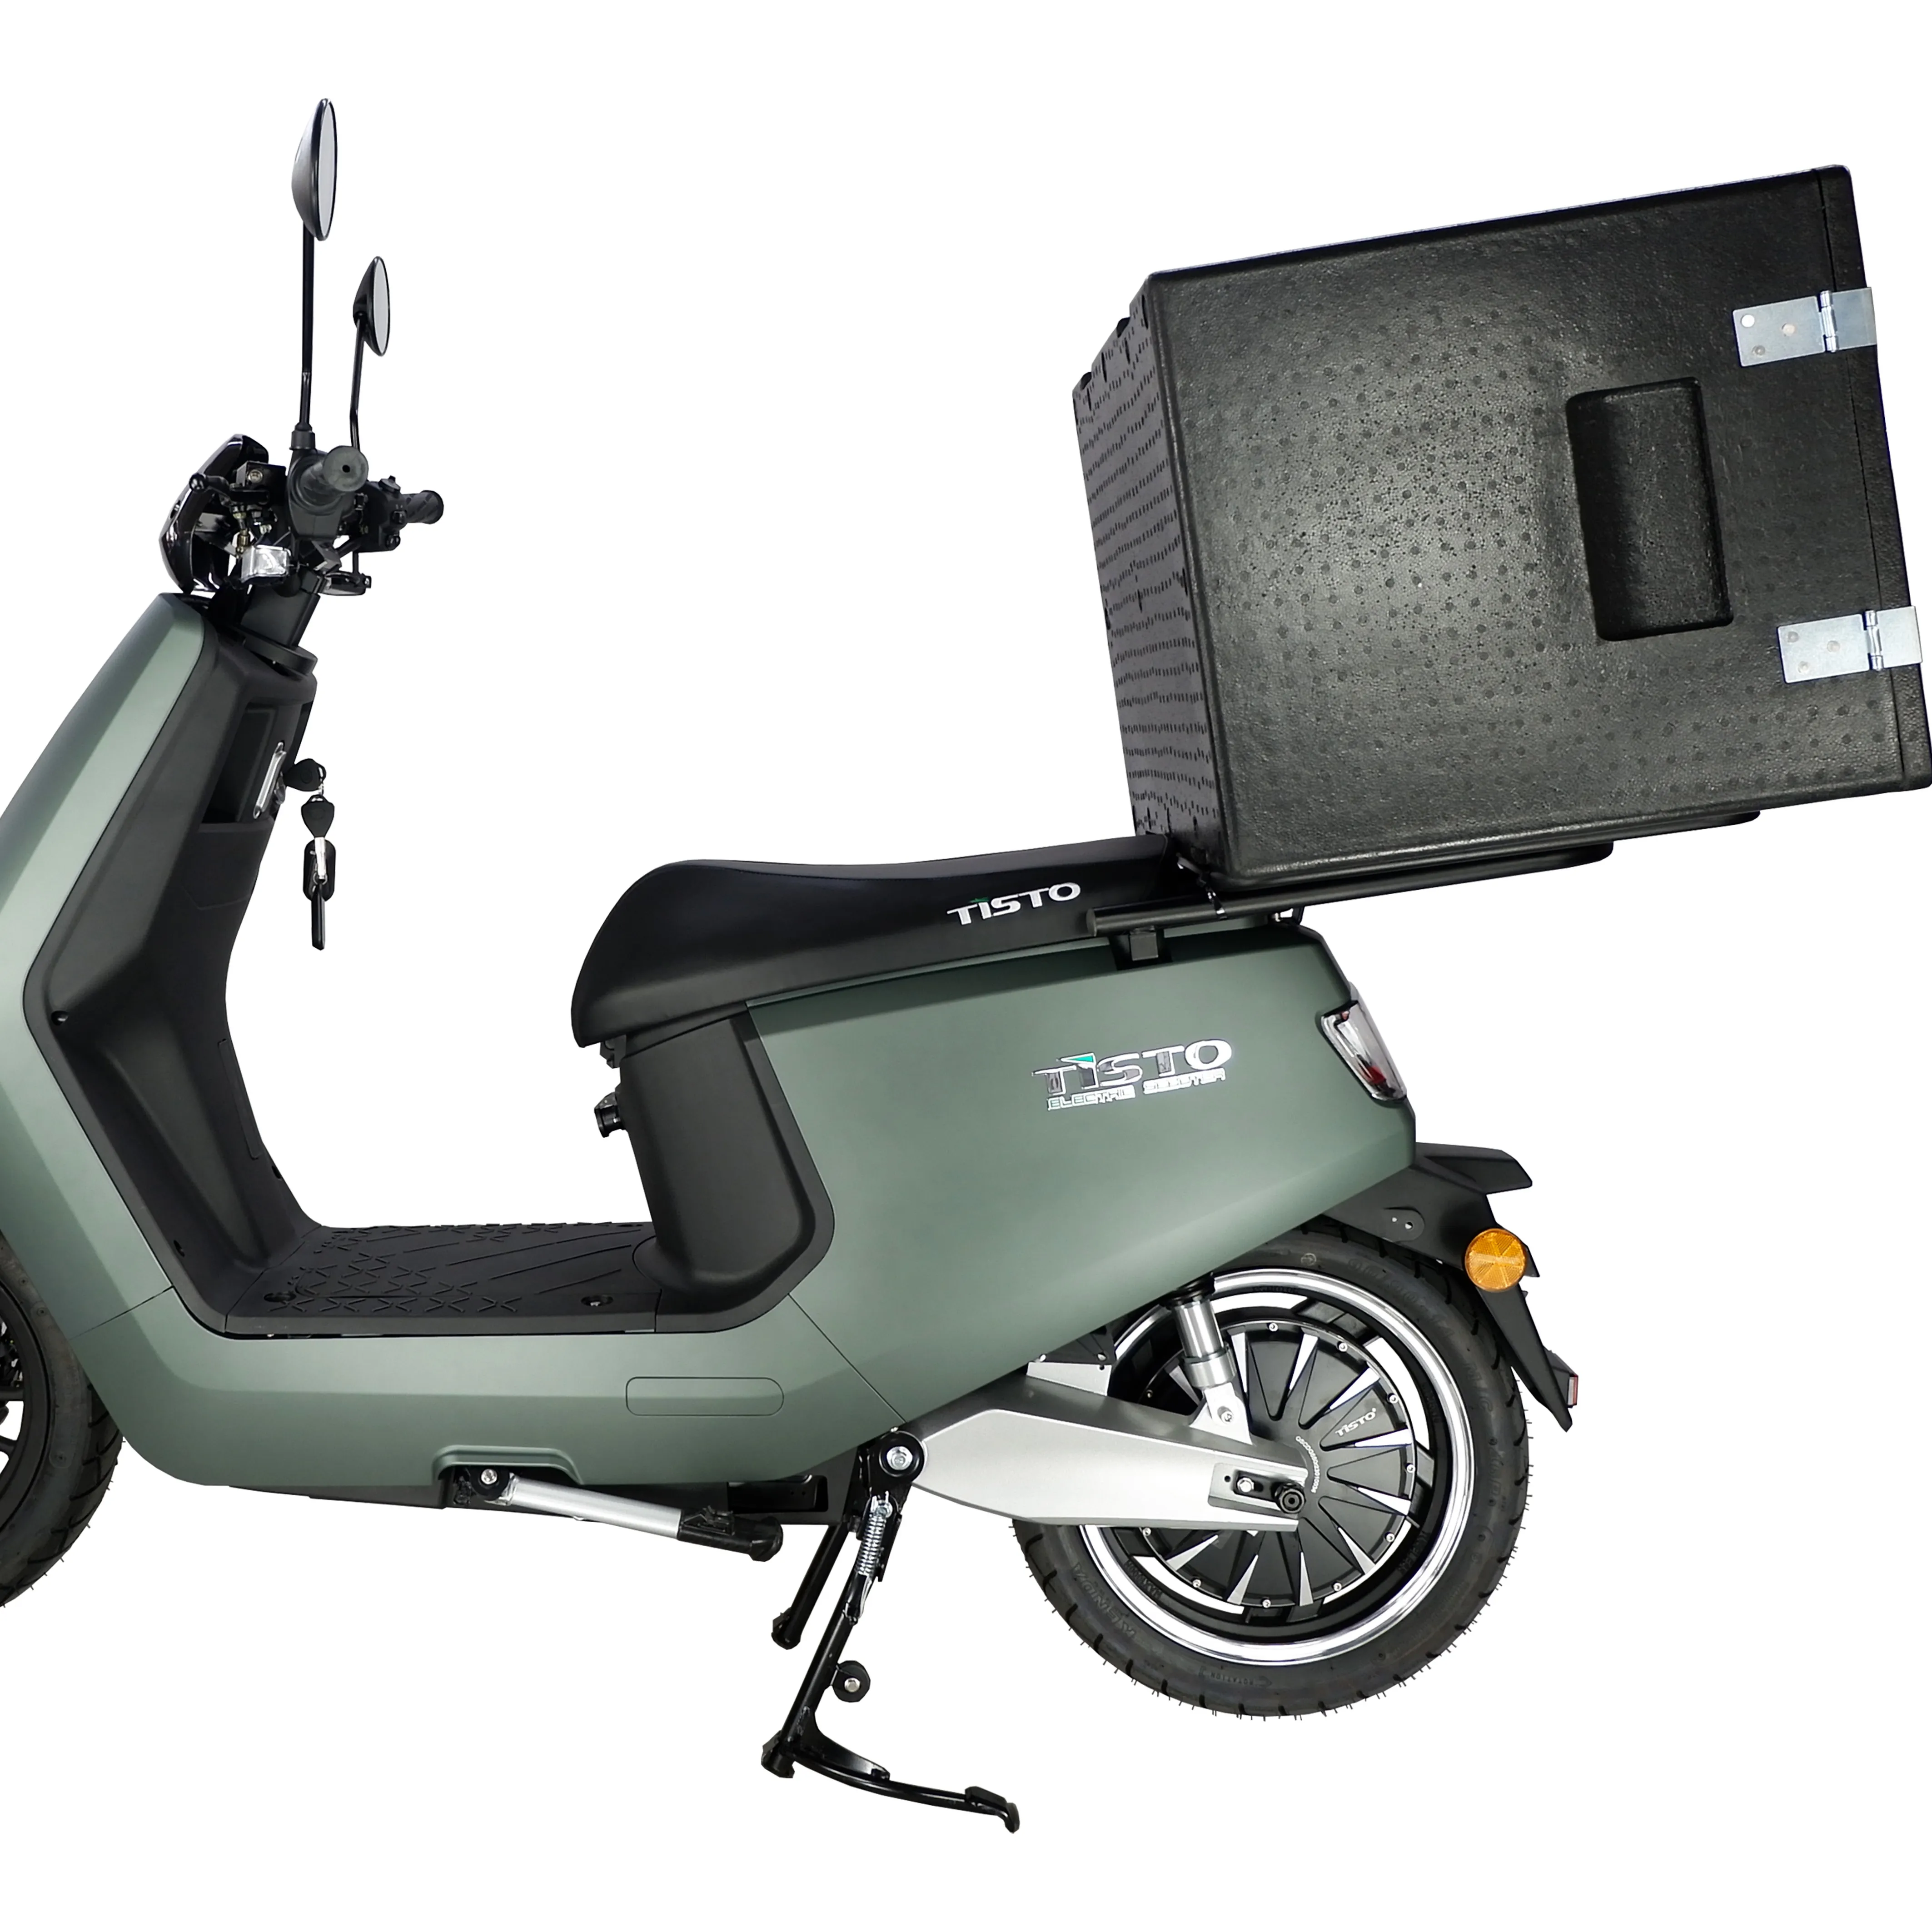 TiSTO terkenal di Eropa jalan hukum elektrik moped untuk dewasa kawat langsung sepeda motor 72v 3000w 2 tahun garansi